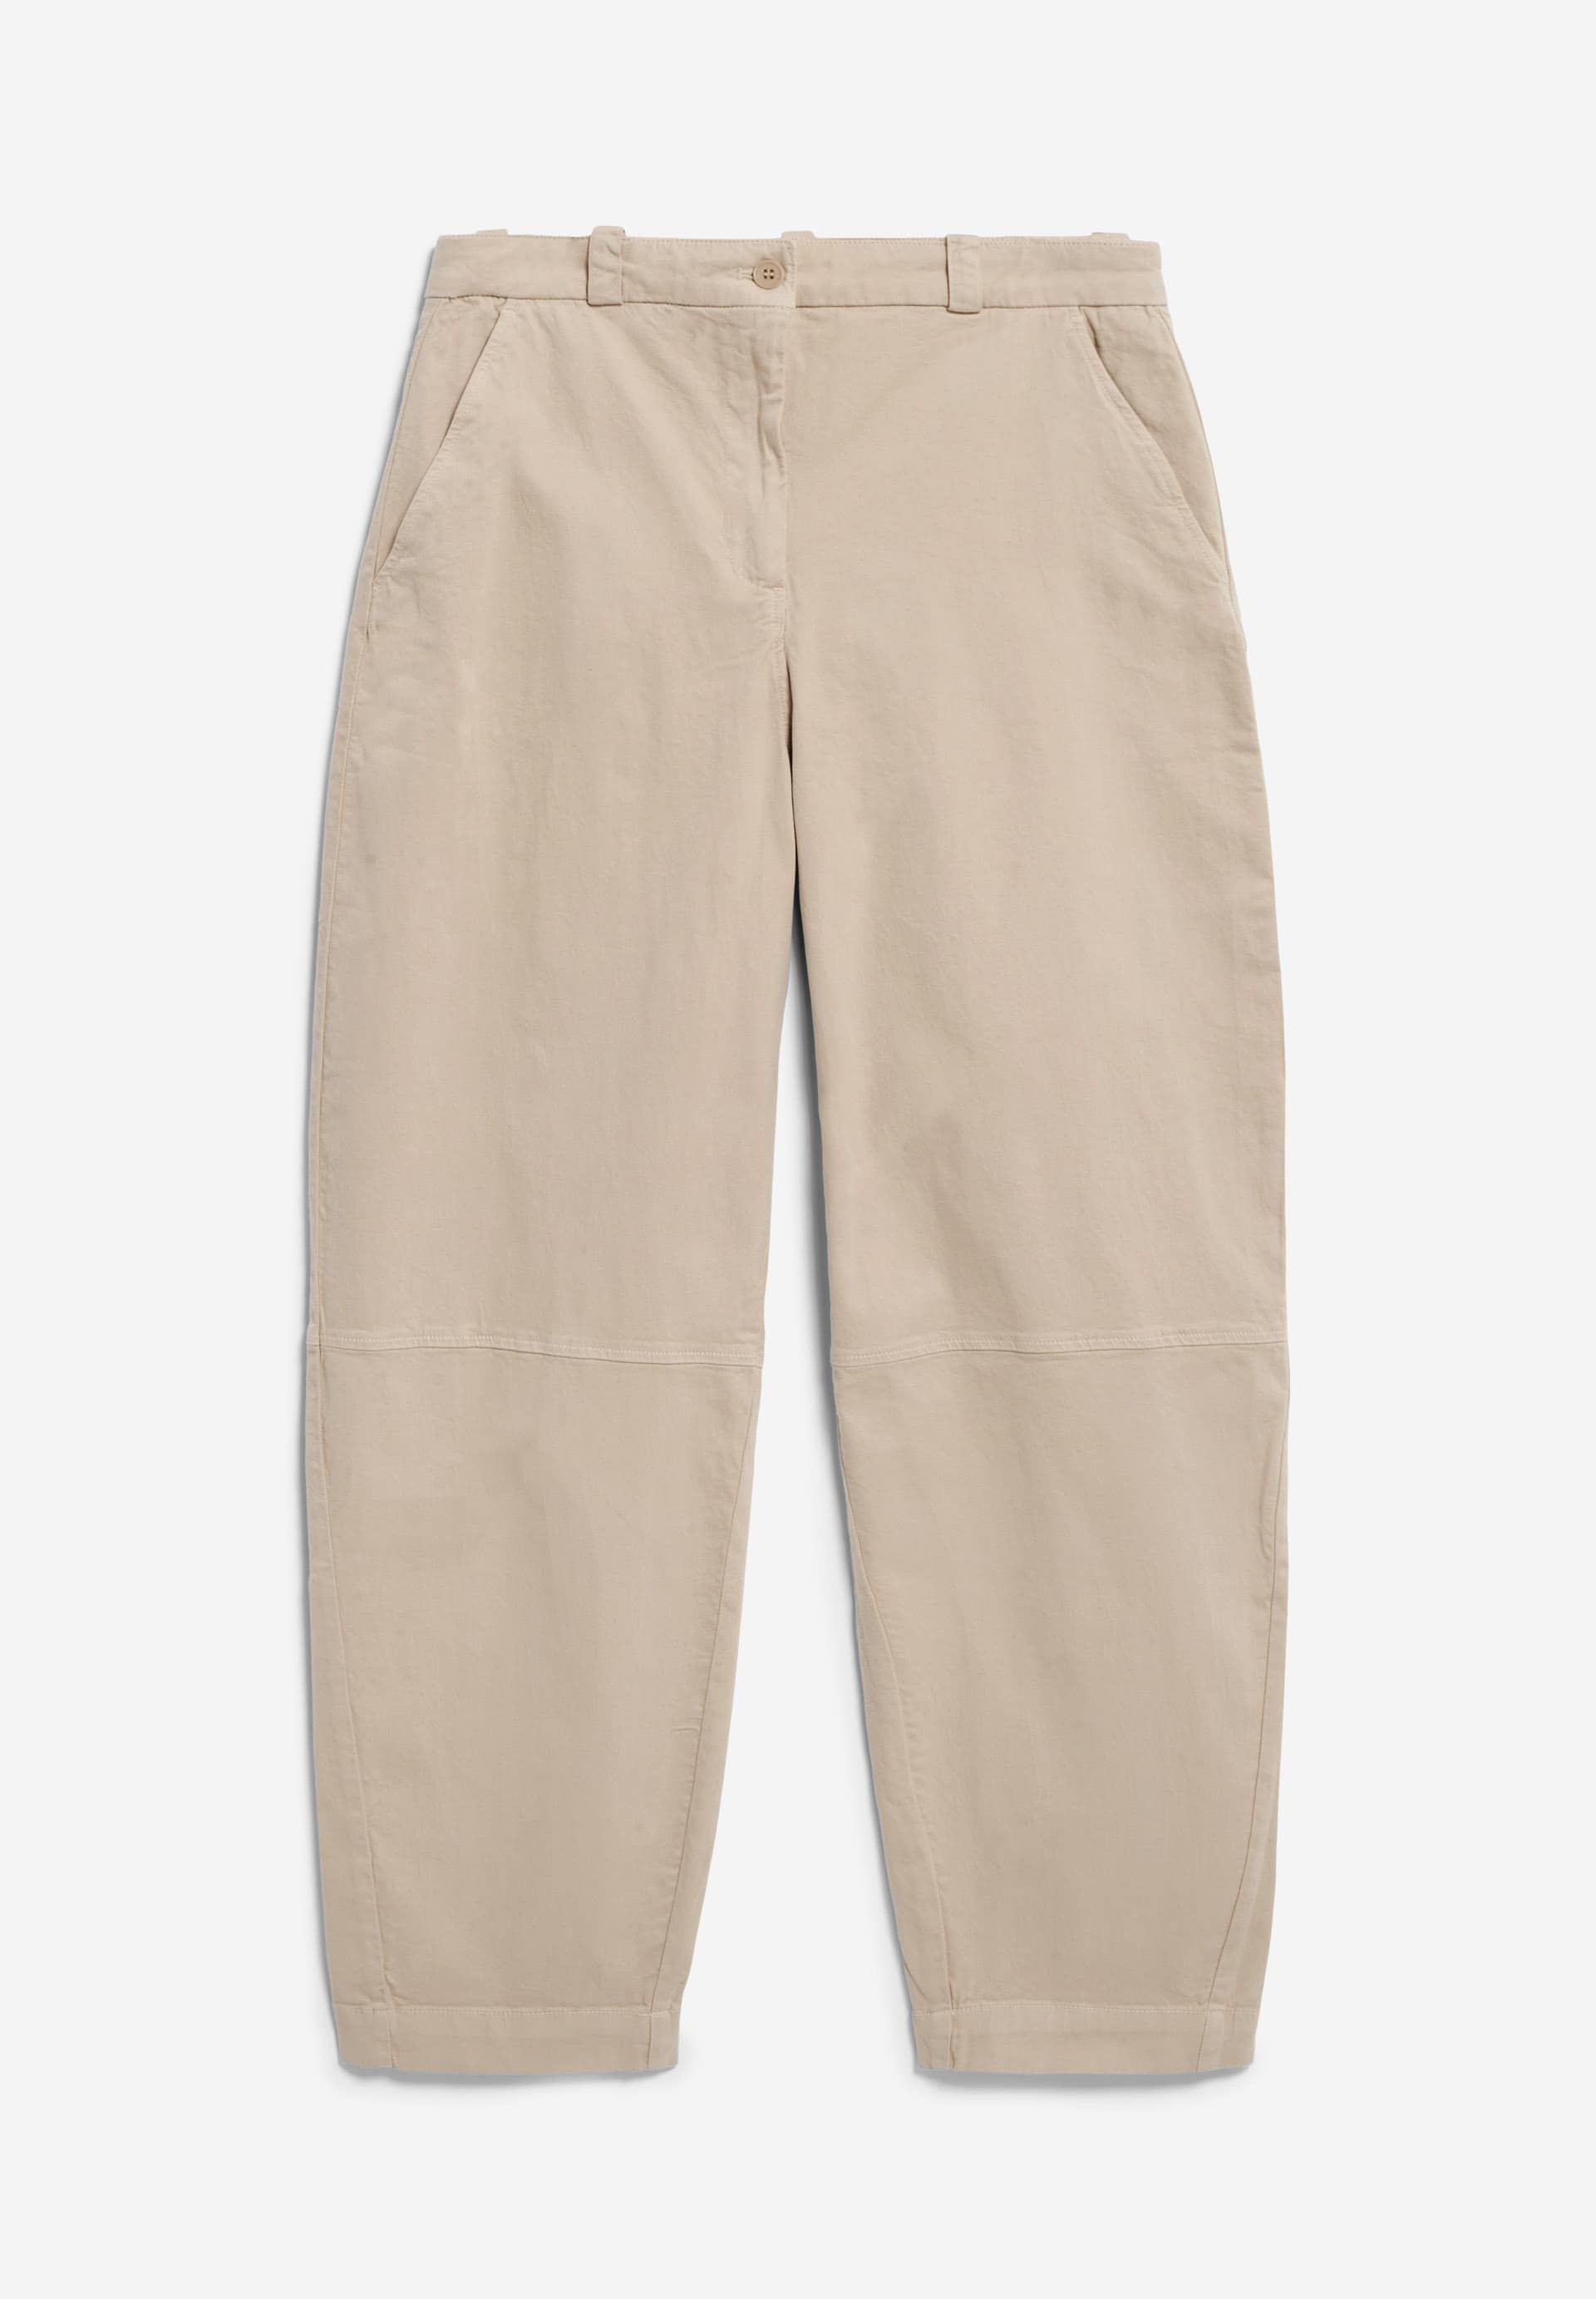 ELJANAA Woven Pants Baggy Fit made of Organic Cotton Mix